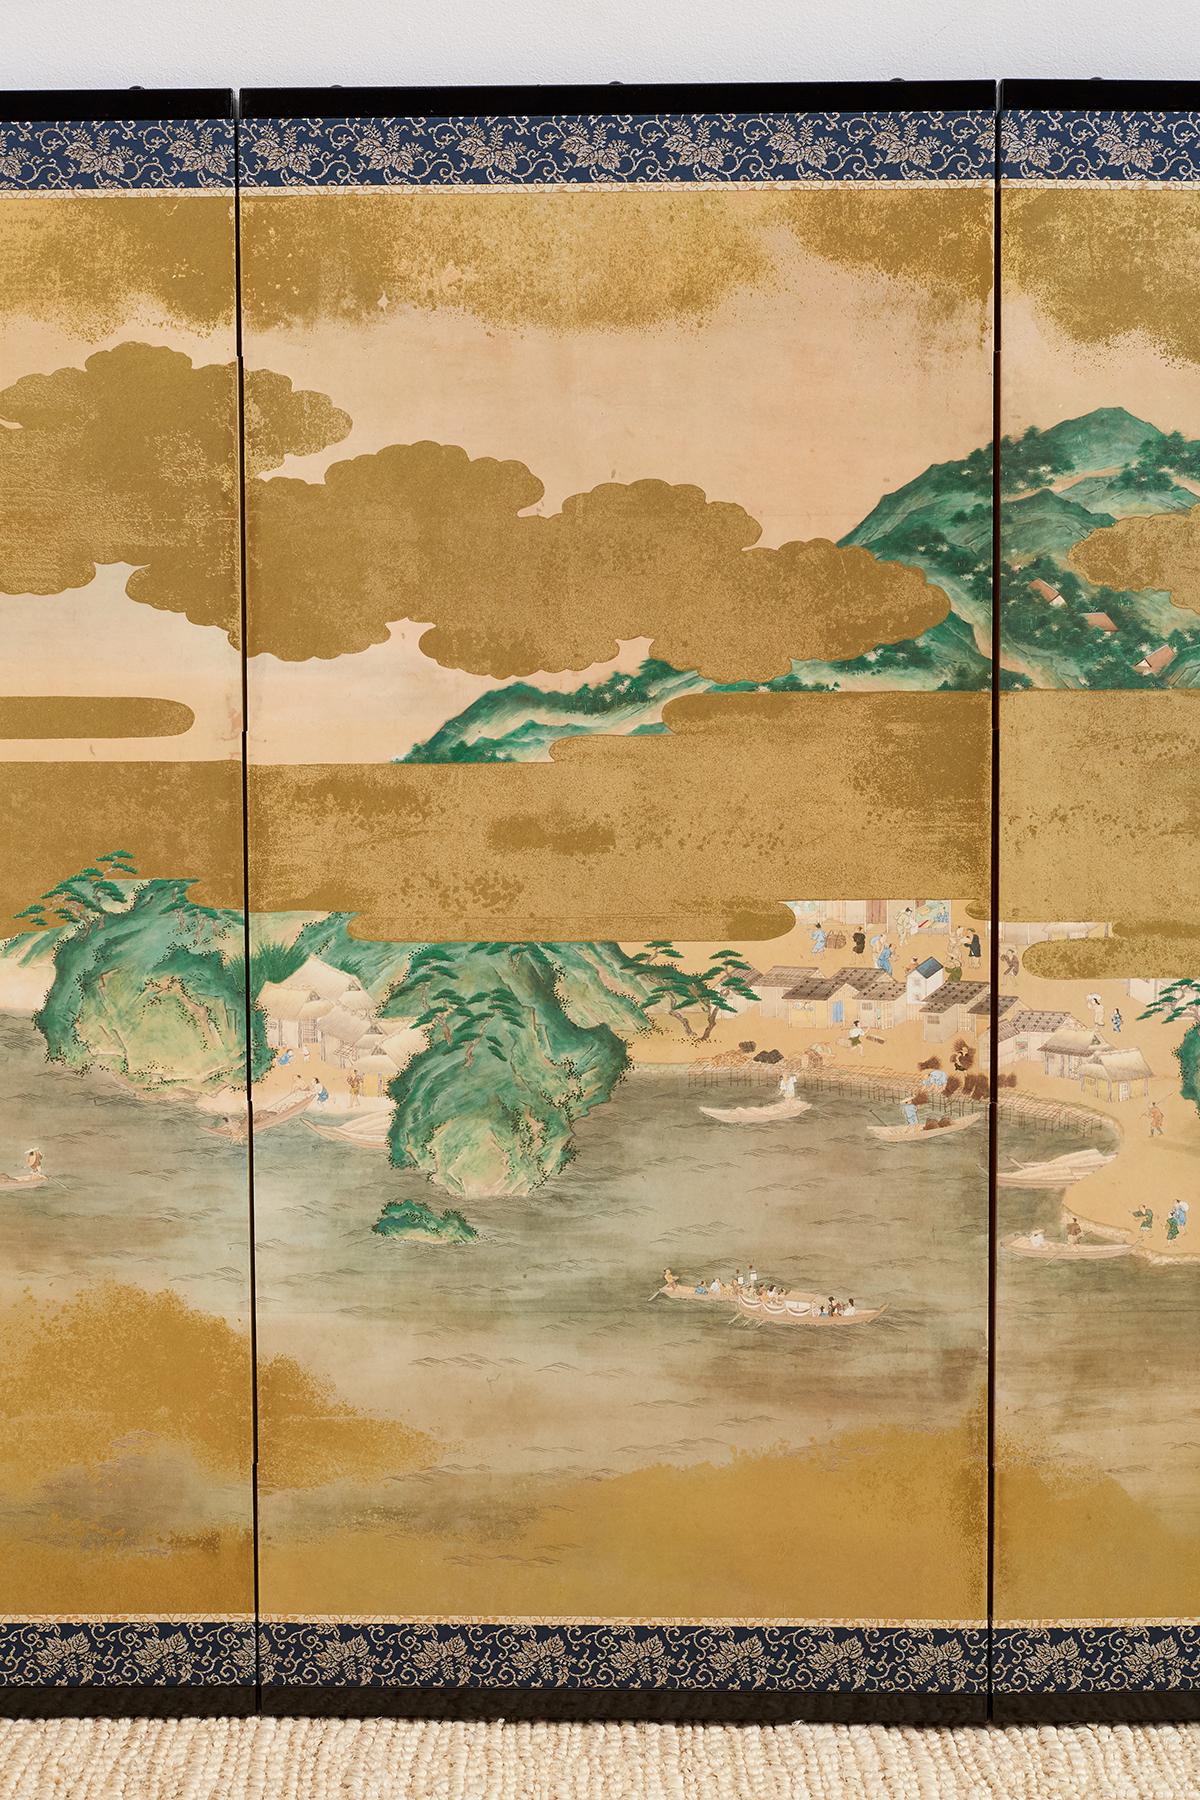 Edo Japanese Six Panel Kano School Style Screen